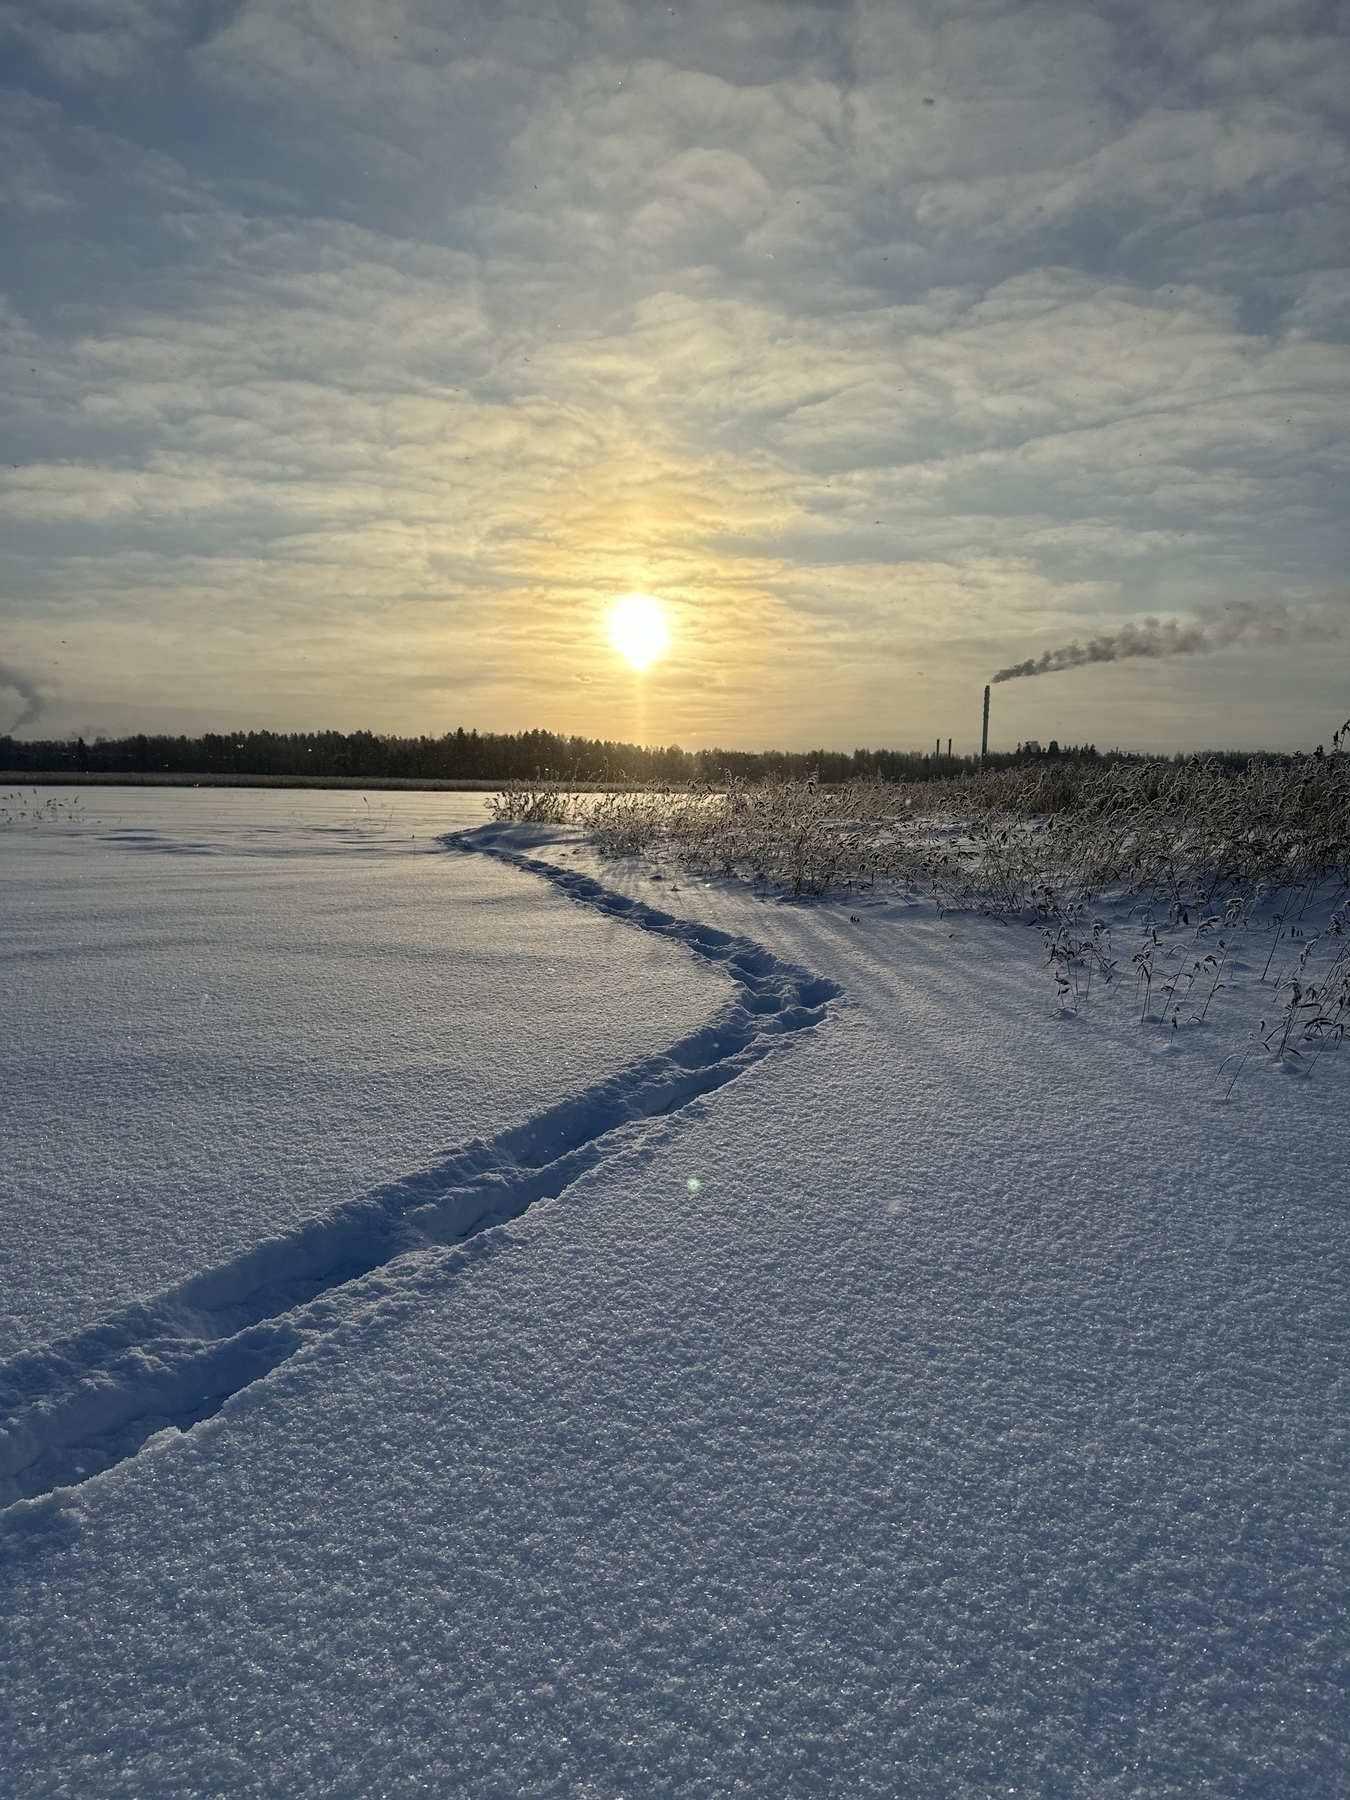 Snow show tracks on fresh snow, reeds, sun laying low